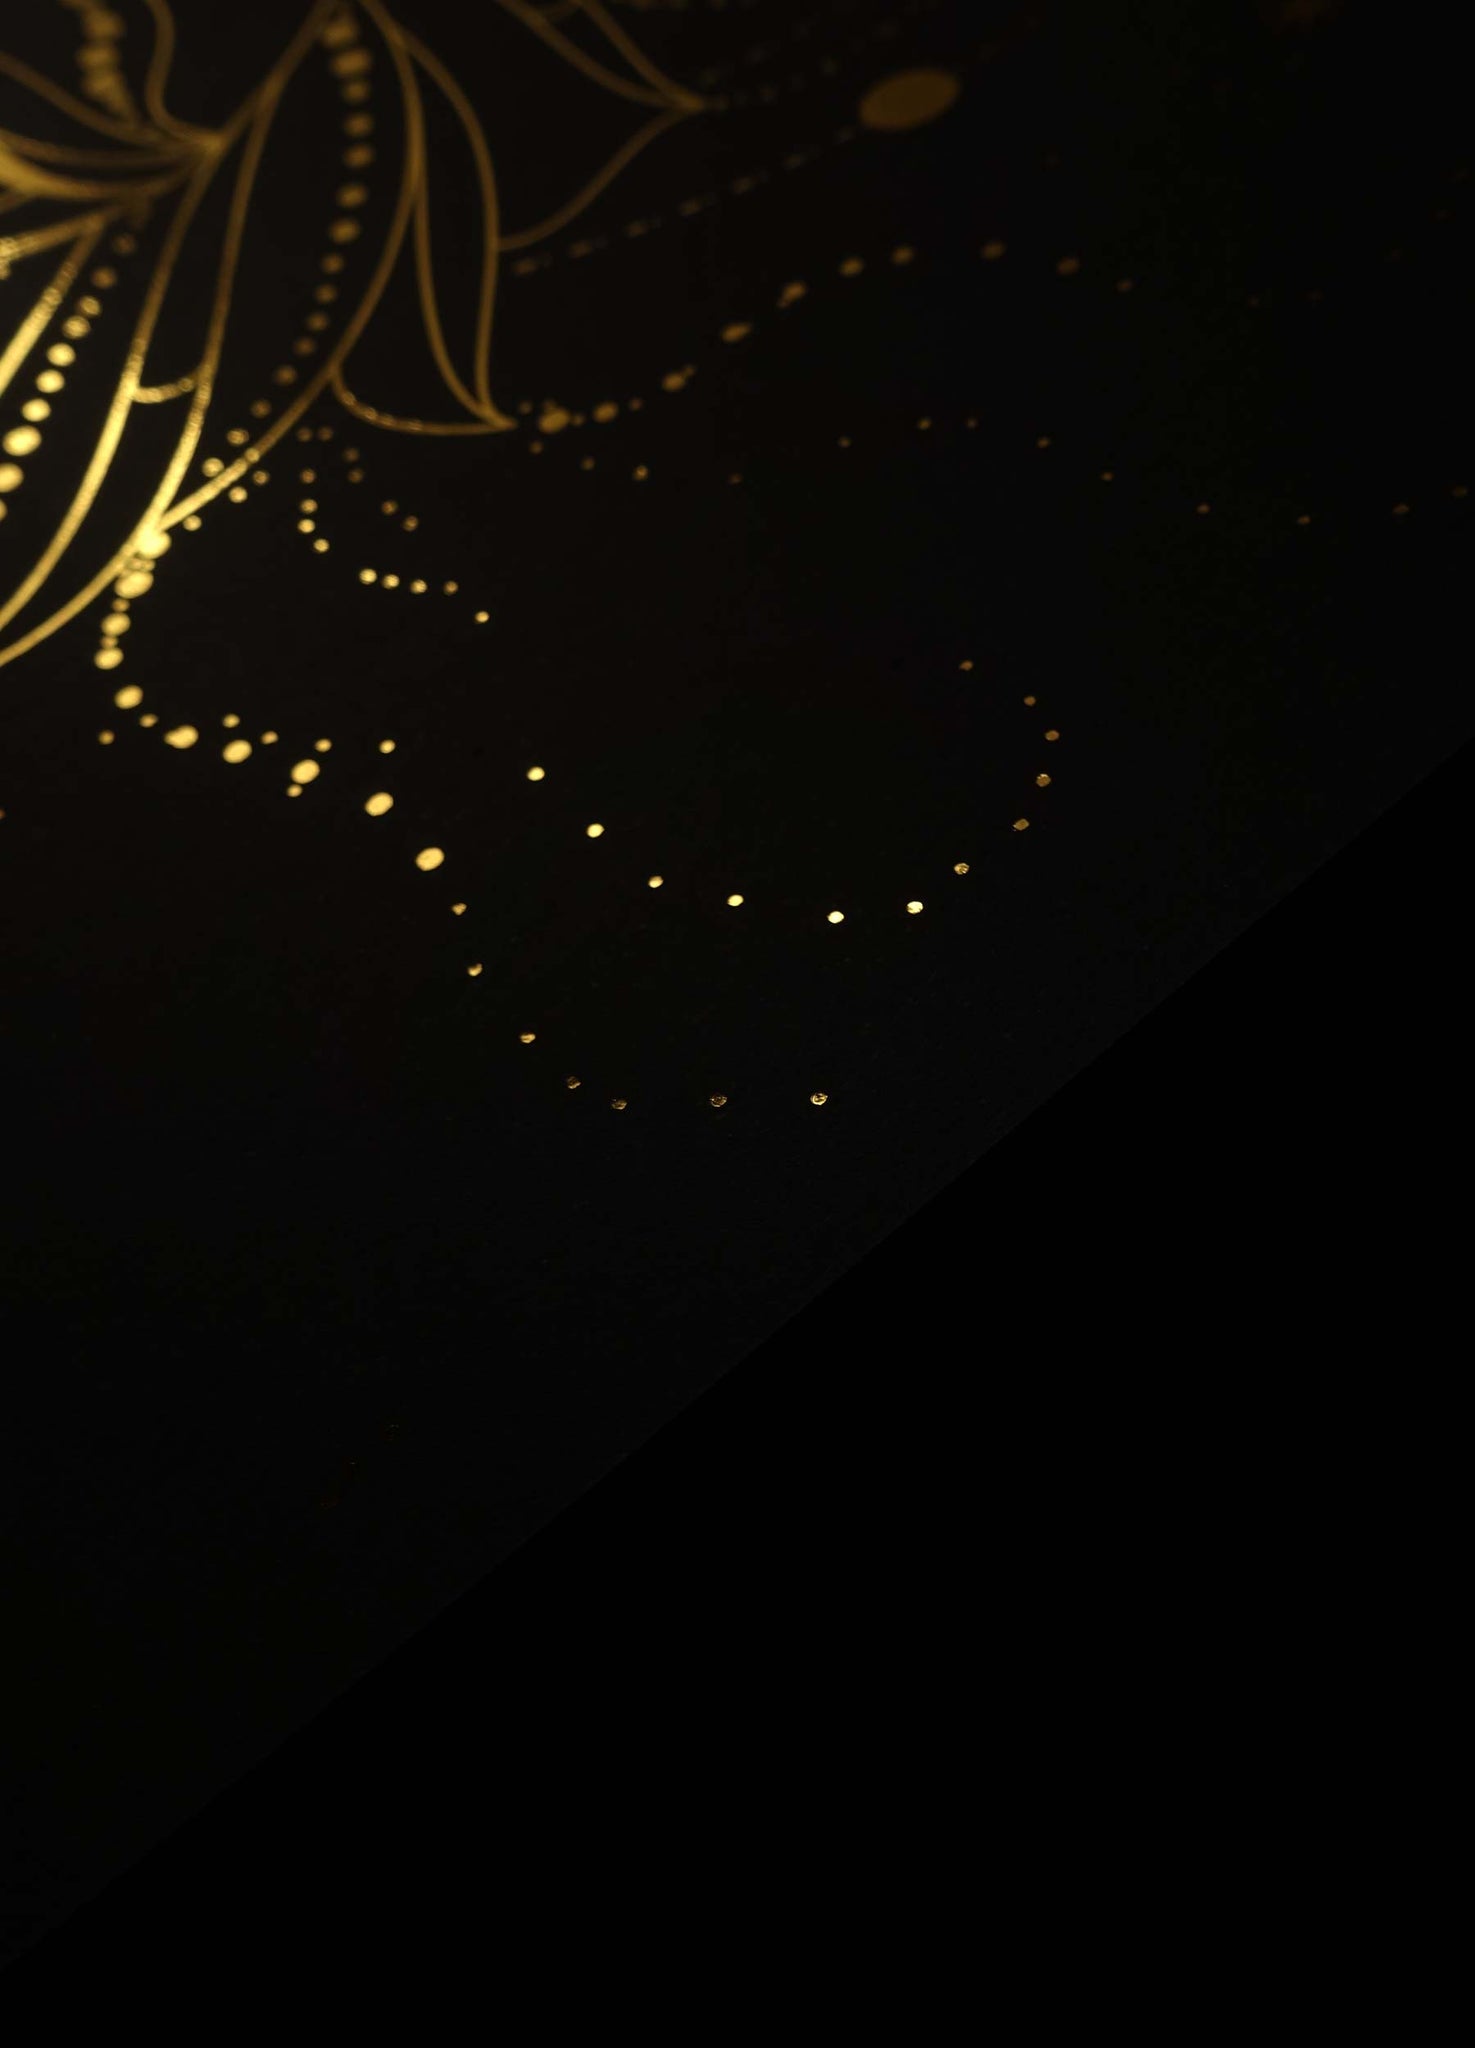 Leo Figure Constellation Gold foil on black paper art print by Cocorrina & Design studio and shop